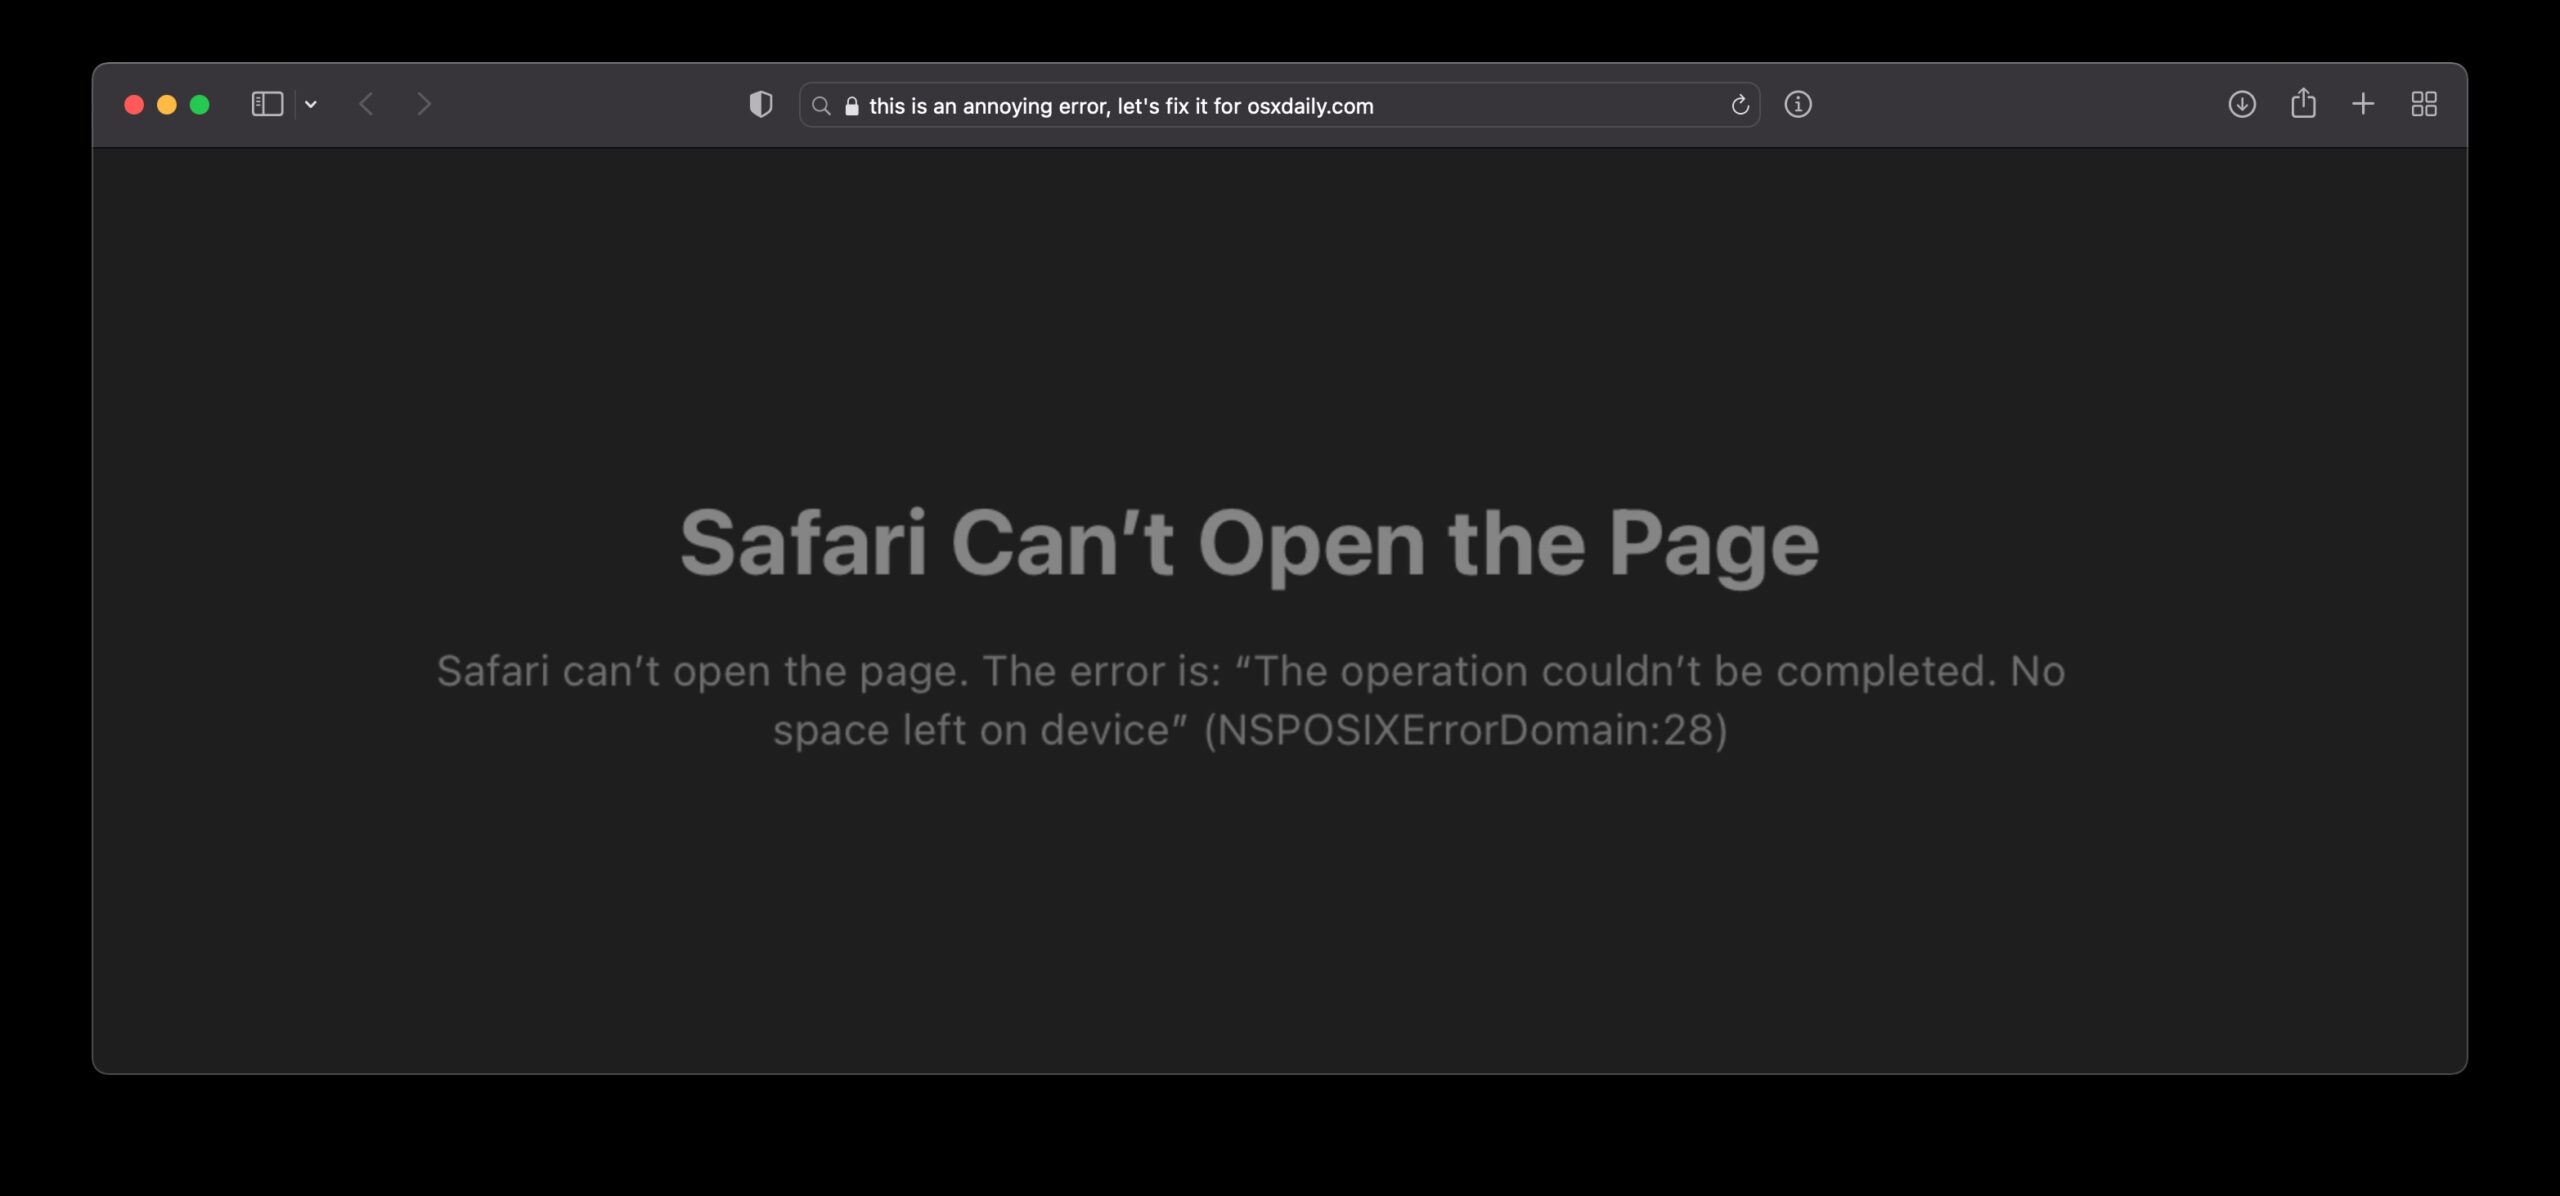 Fix “Safari Can’t Open Page NSPOSIXErrorDomain:28” Error on Mac